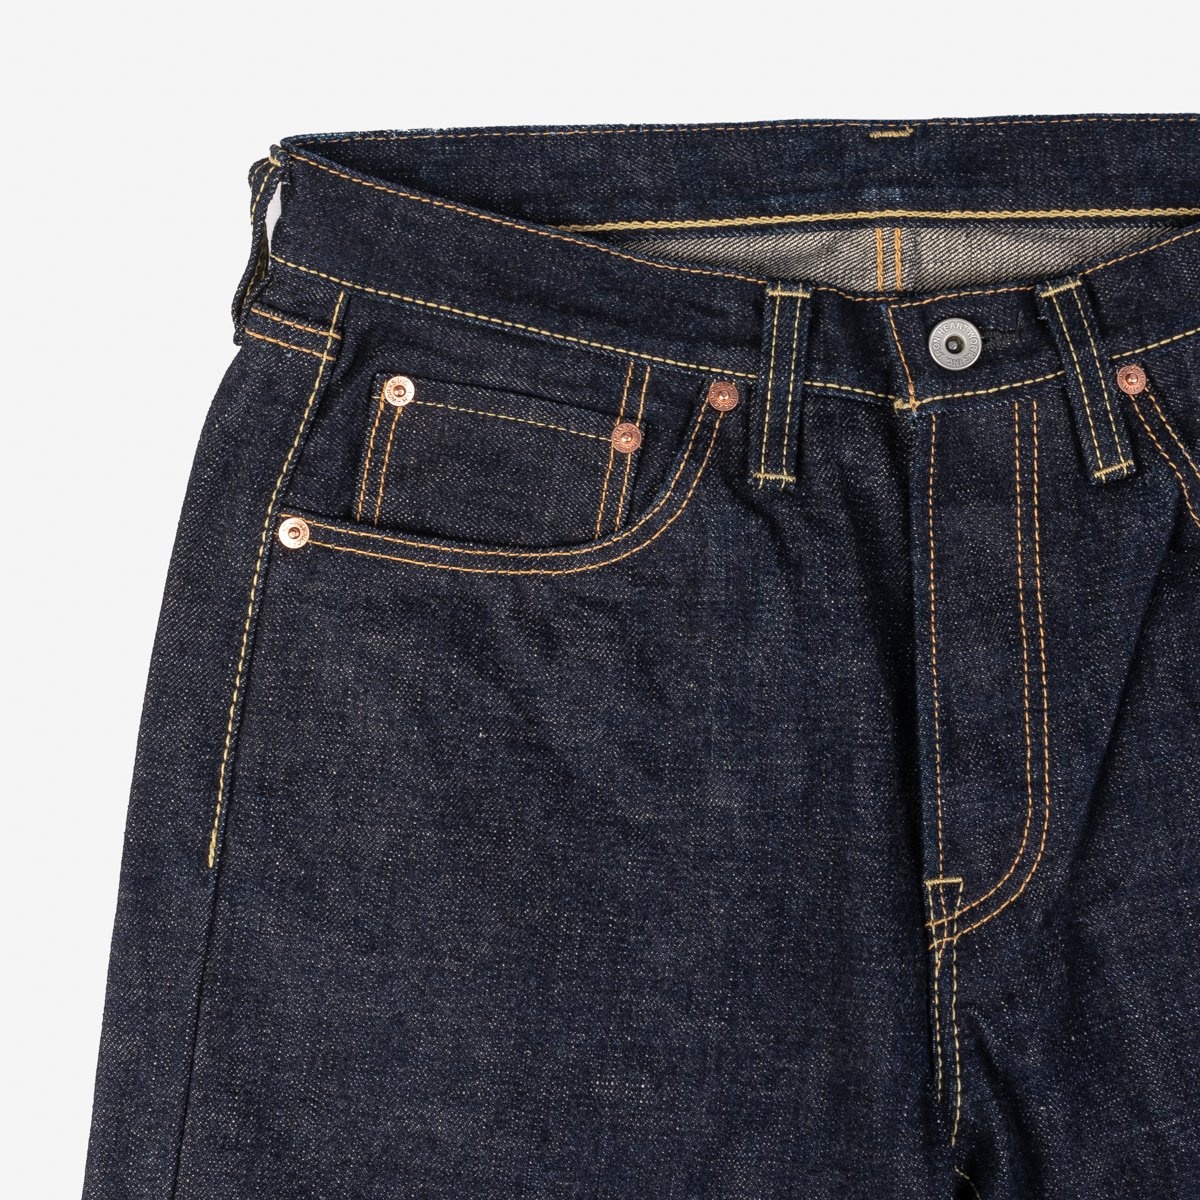 IH-555S-18 18oz Vintage Selvedge Denim Super Slim Cut Jeans - Indigo - 6